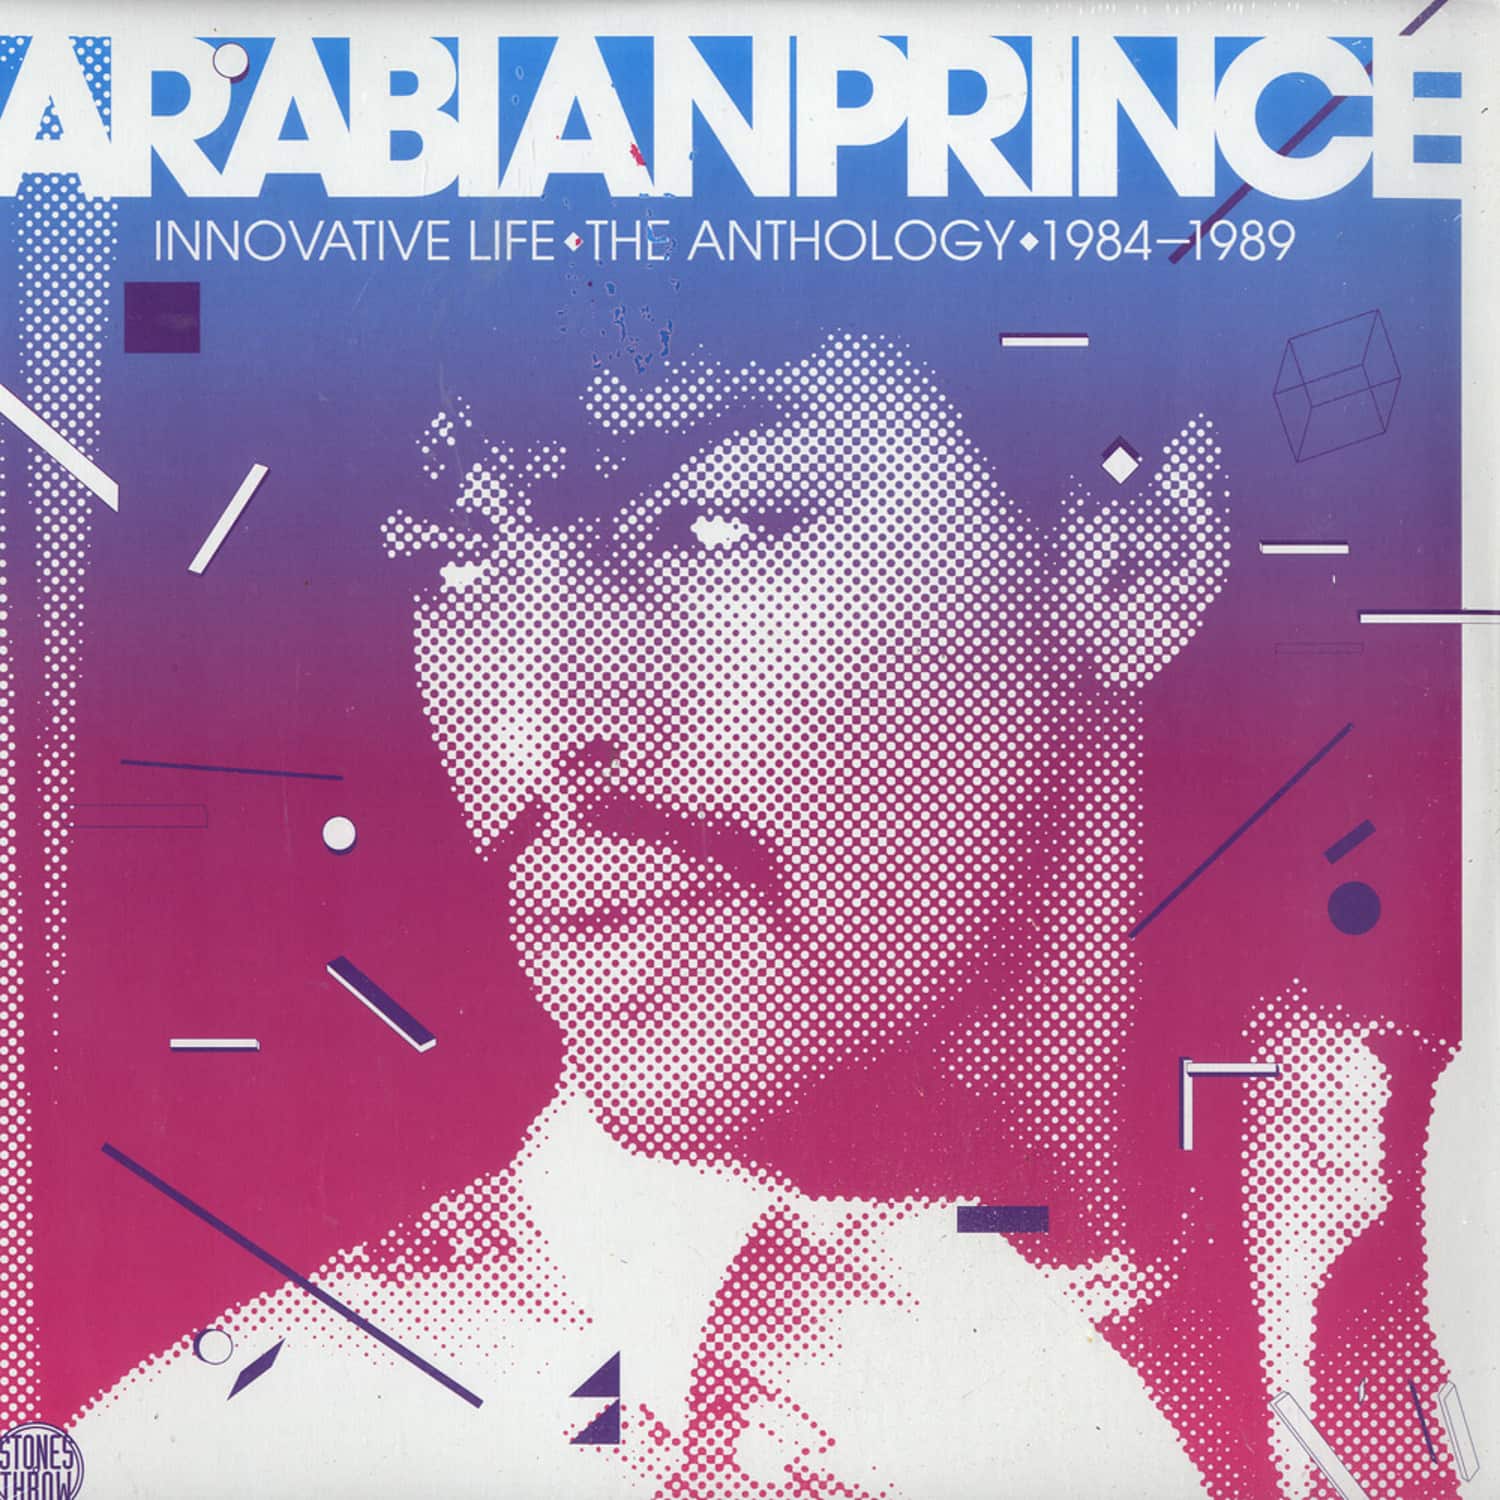 Arabian Prince - INNOVATIVE LIFE 